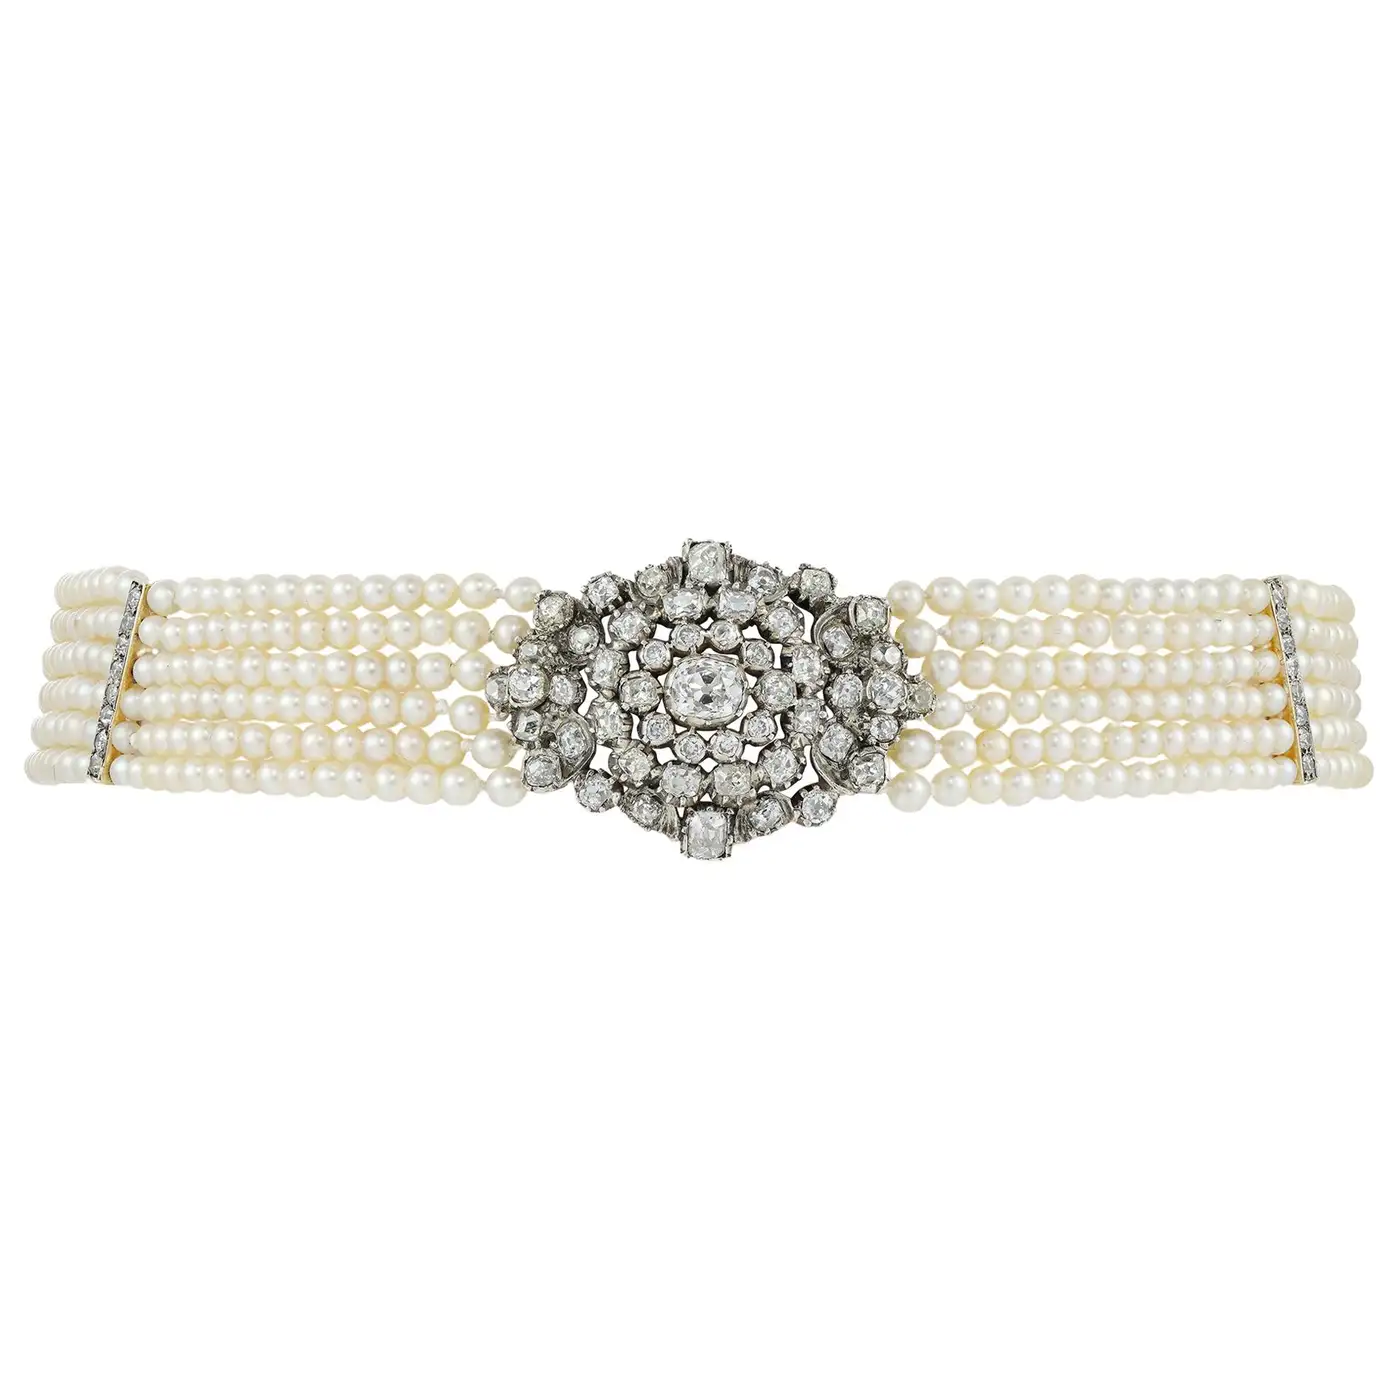 Late-Georgian-Six-Row-Natural-Pearl-and-Diamond-Collar-Necklace-1.webp